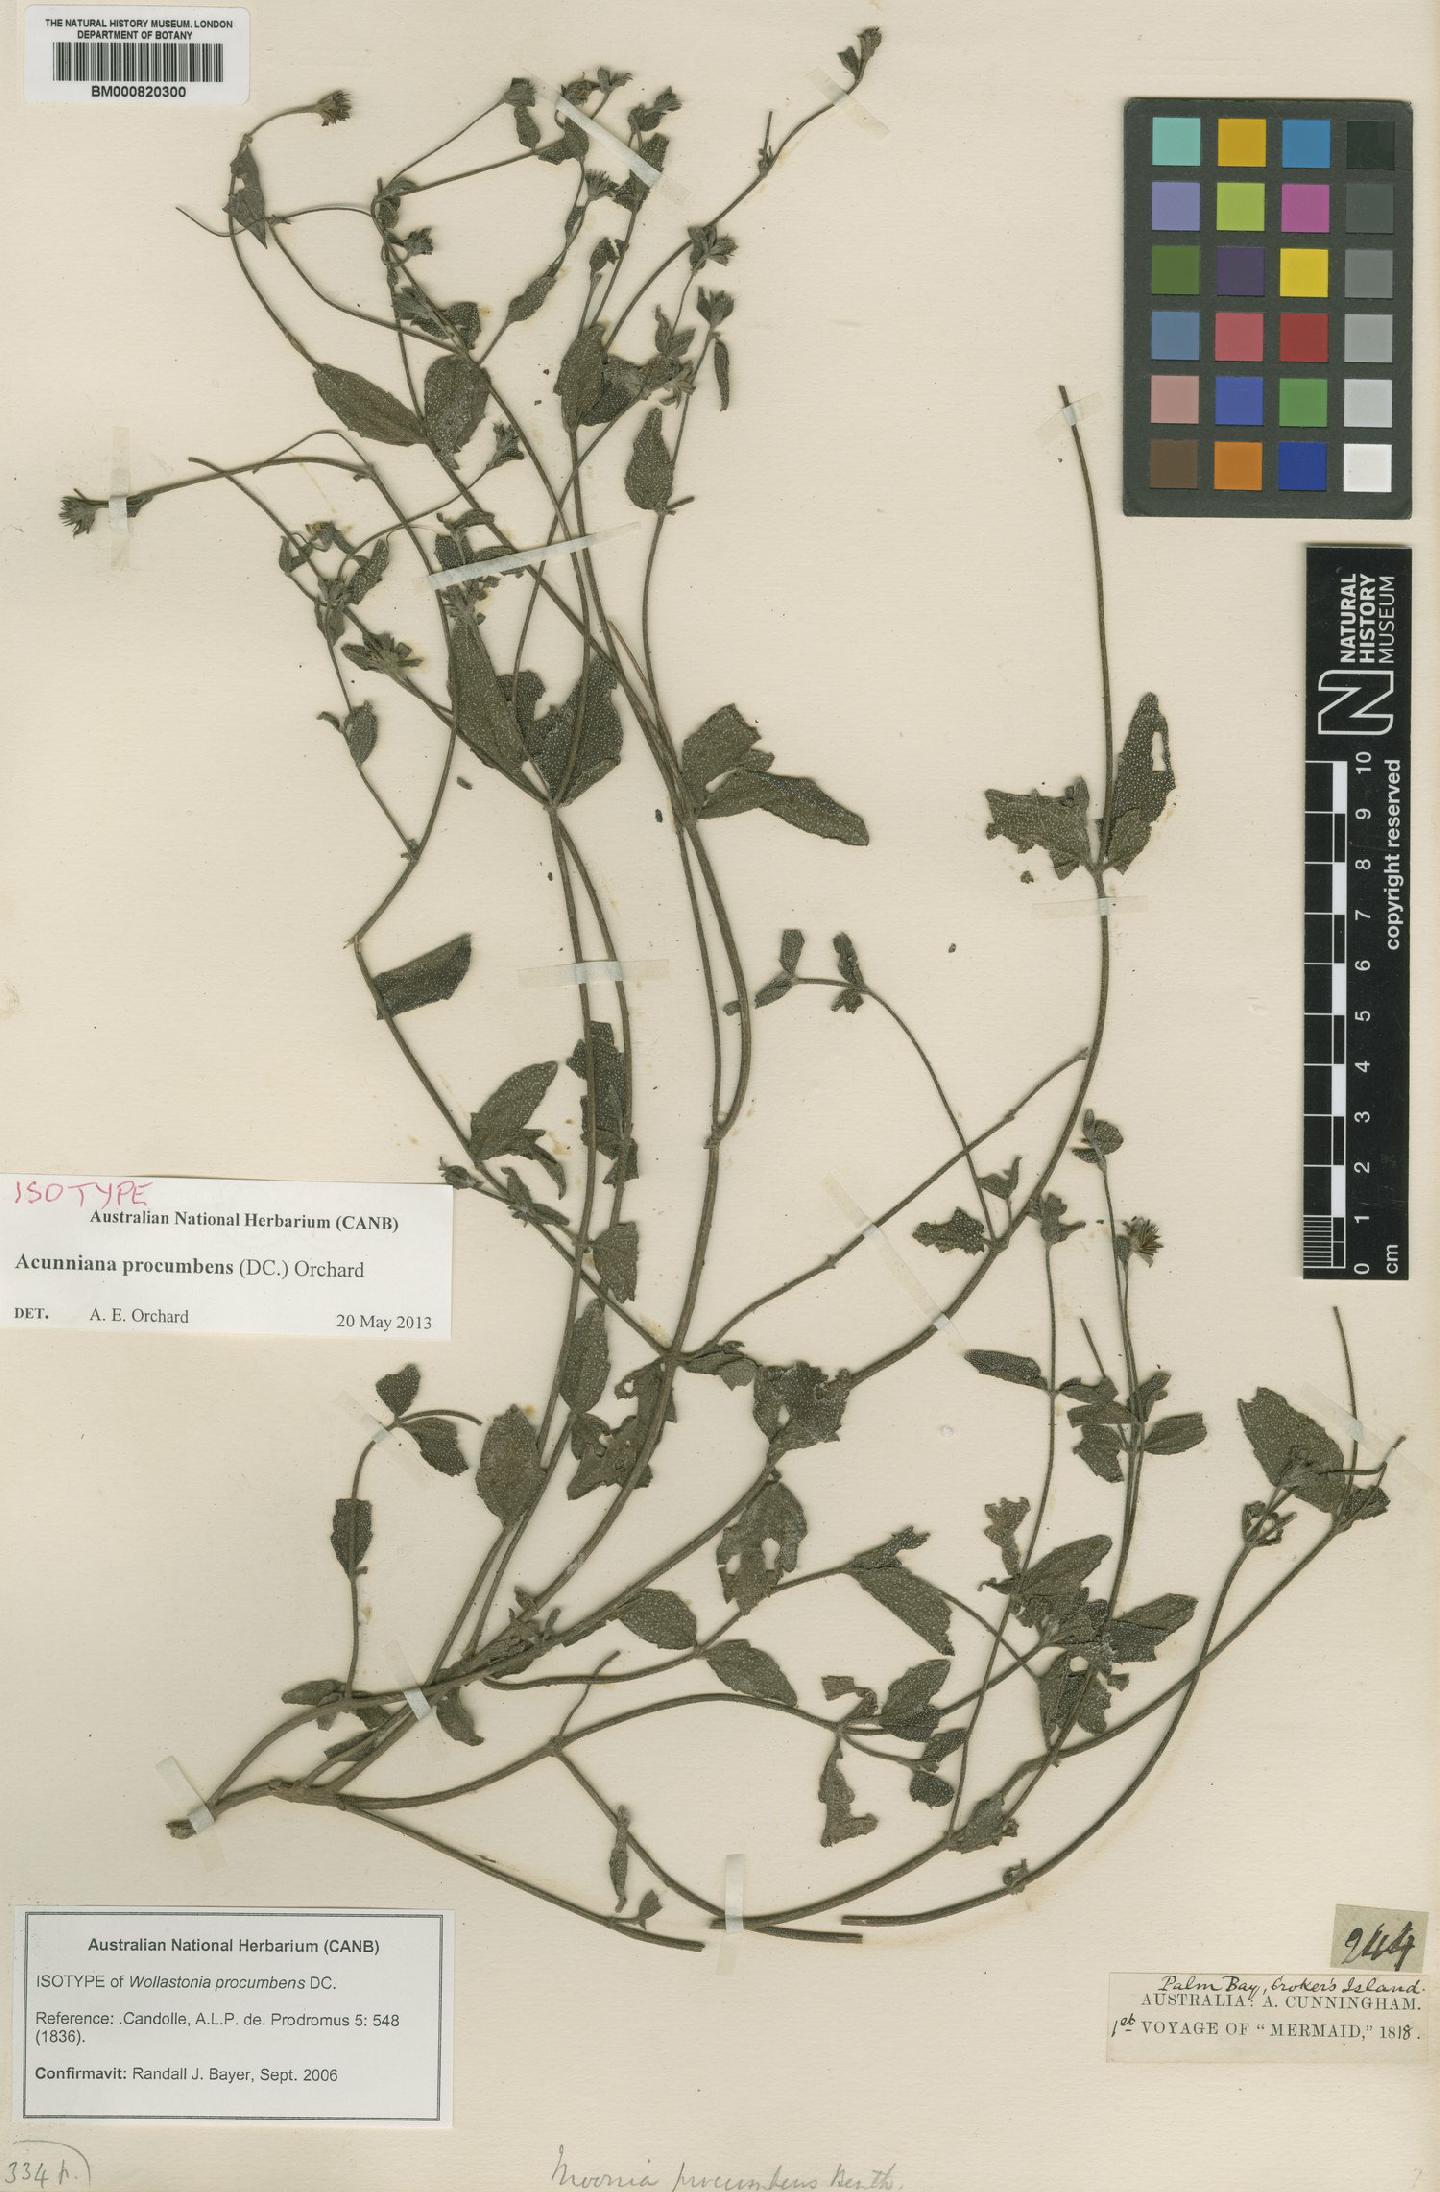 To NHMUK collection (Acunniana procumbens (DC.) Orchard; Isotype; NHMUK:ecatalogue:4969219)